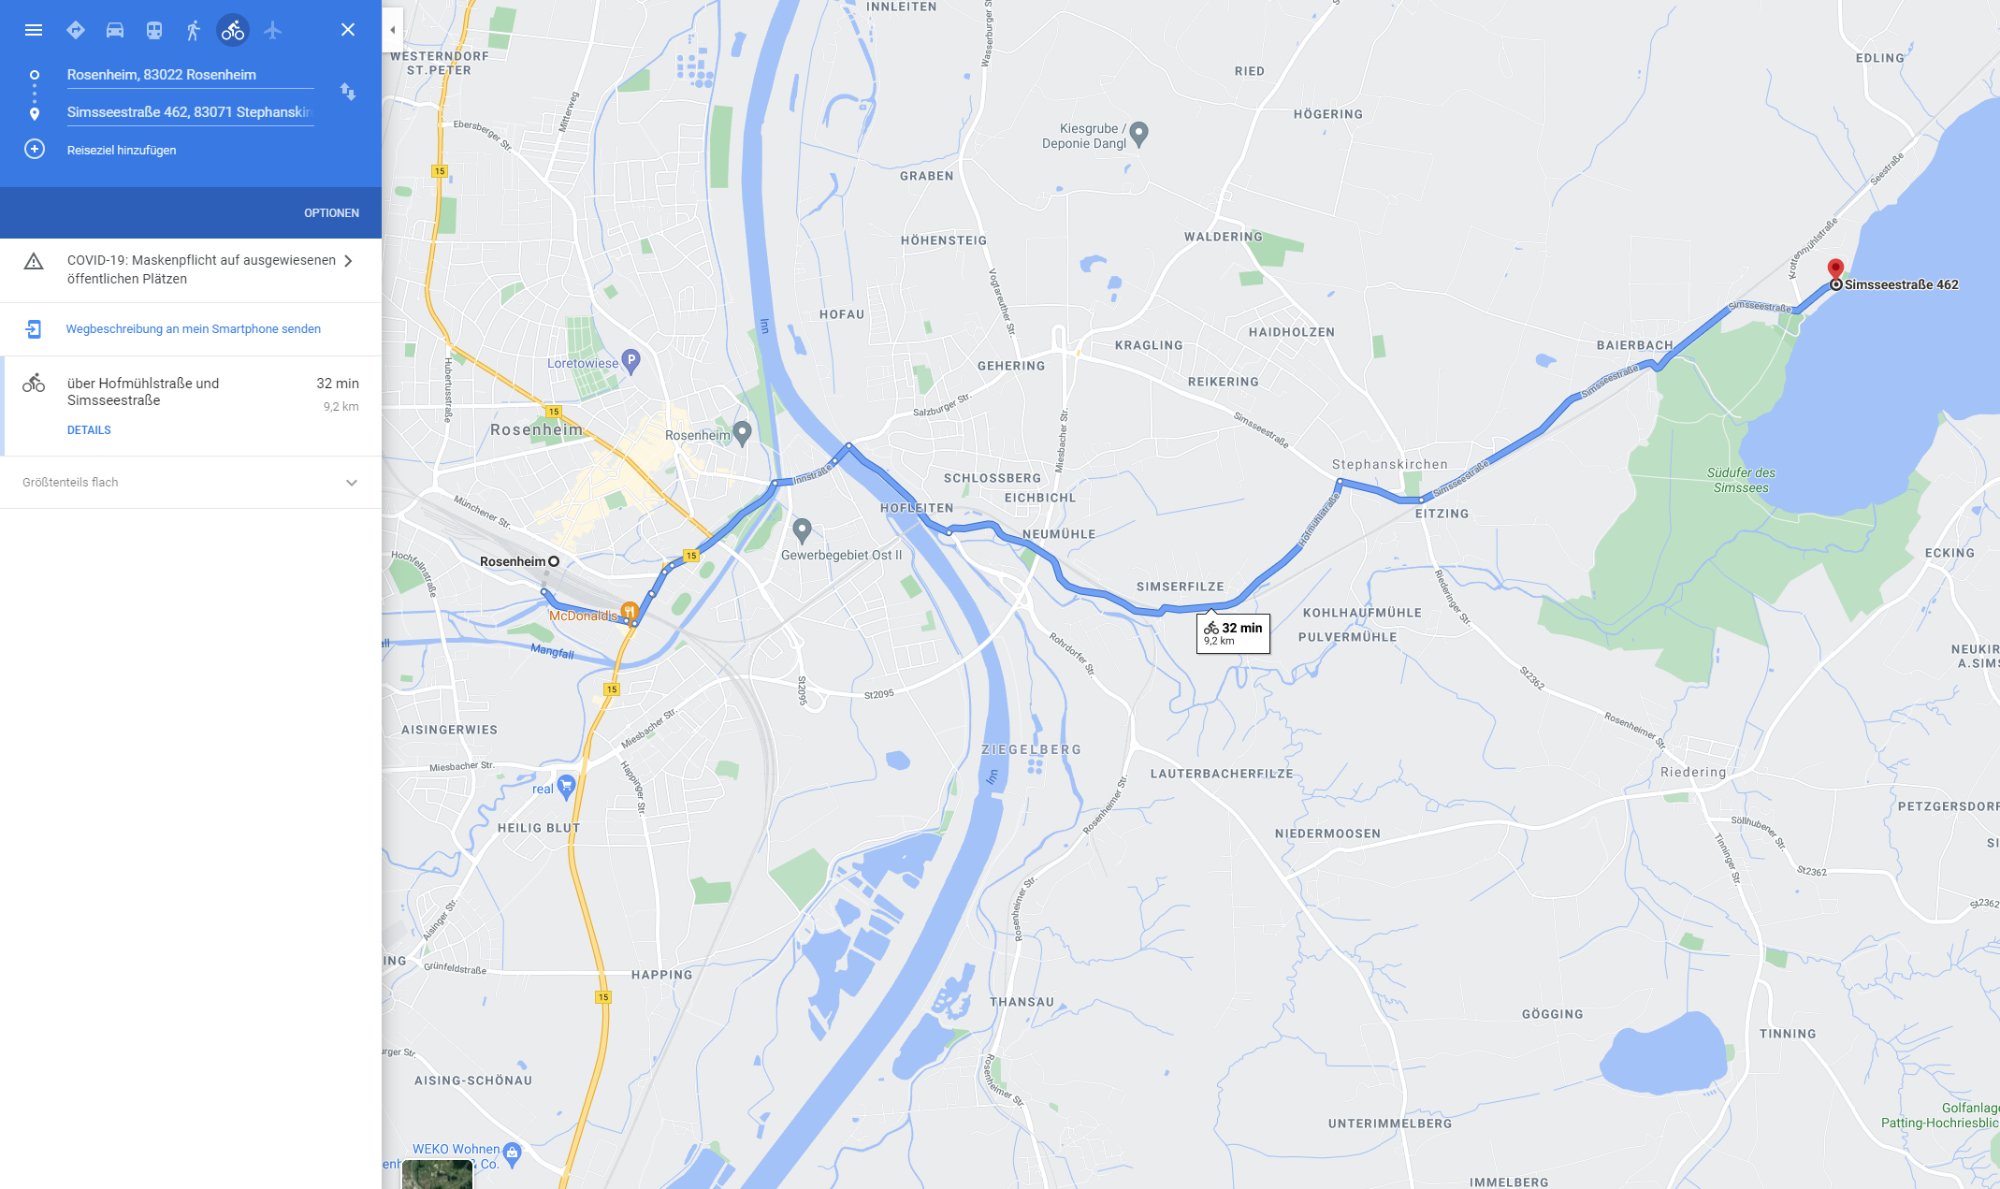 Video ️ Fahrrad Navigation mit Google Maps im Test